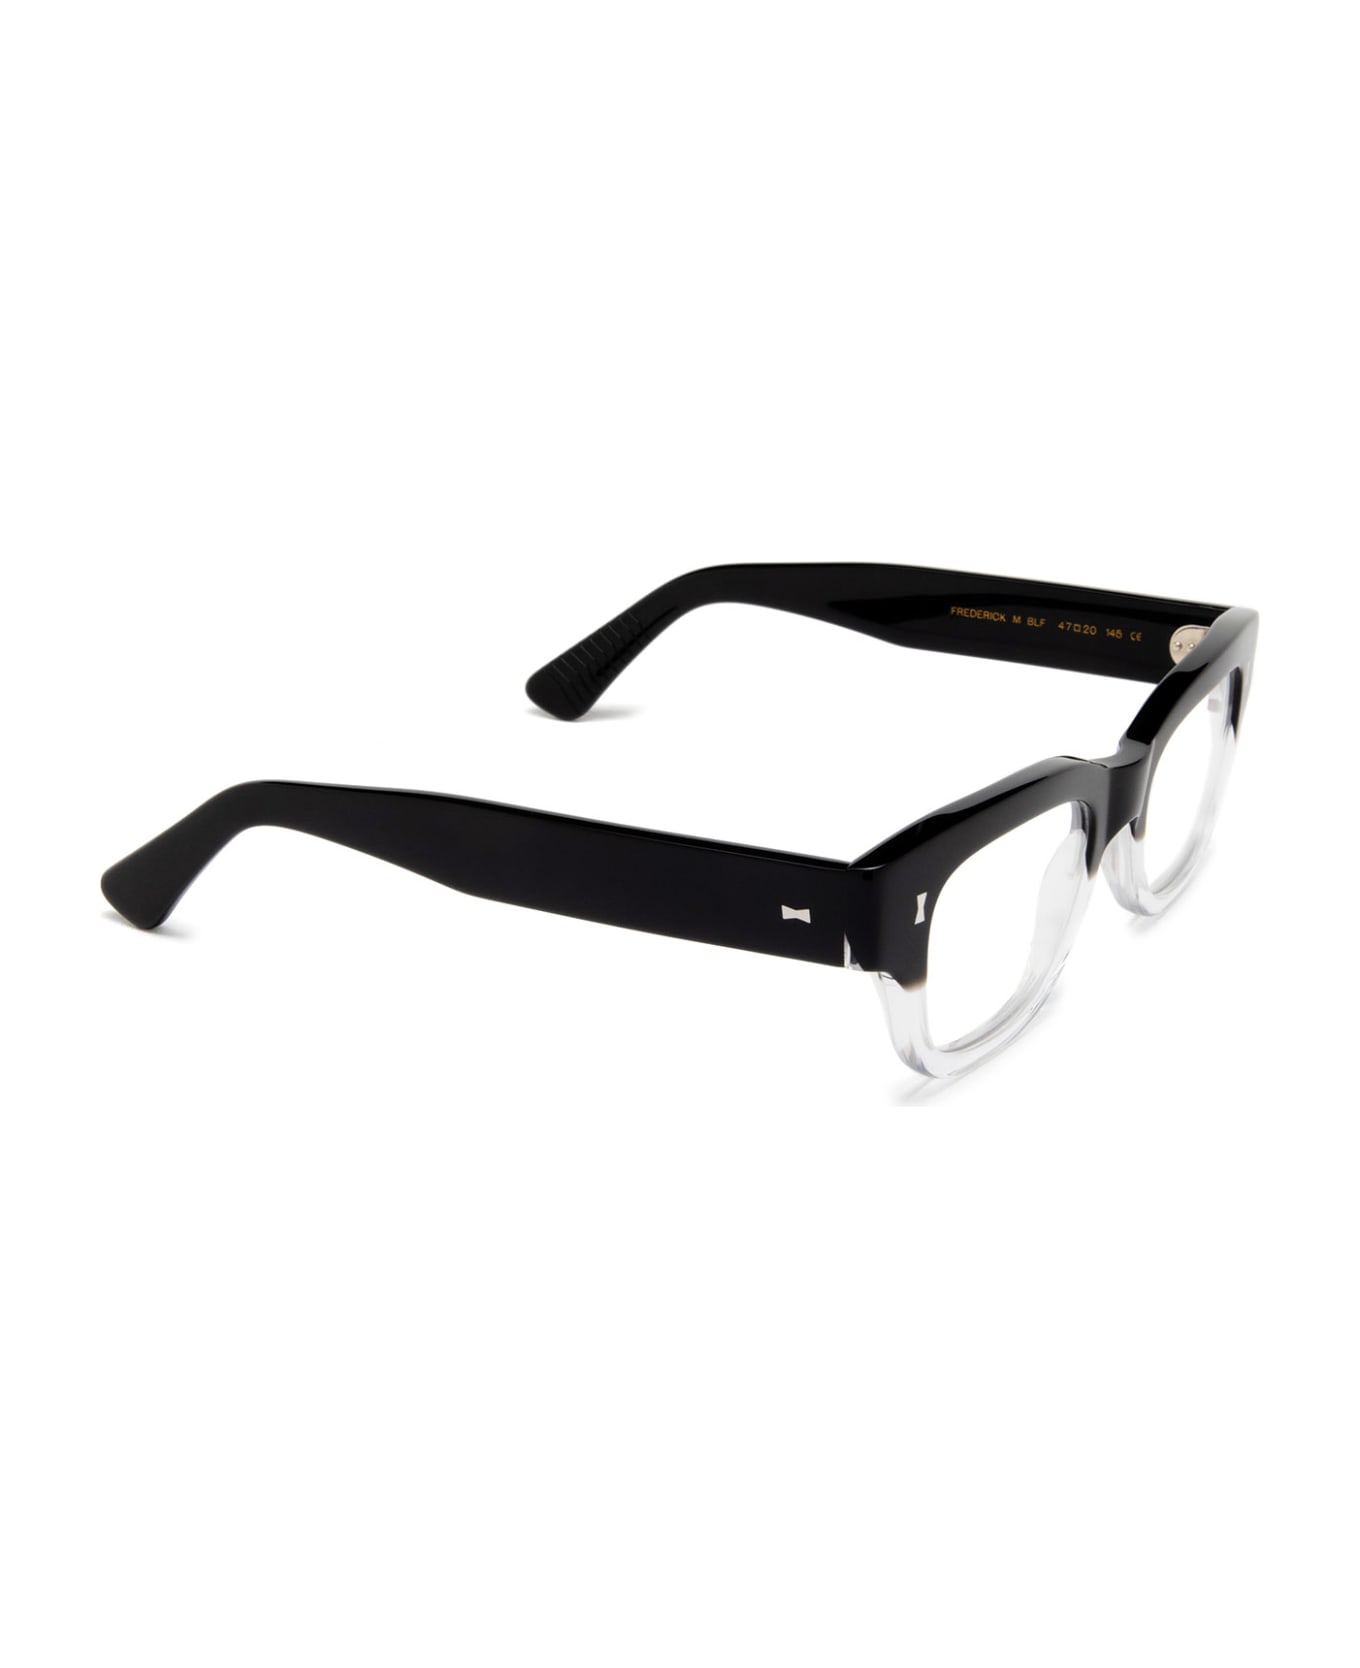 Cubitts Frederick Black Fade Glasses - Black Fade